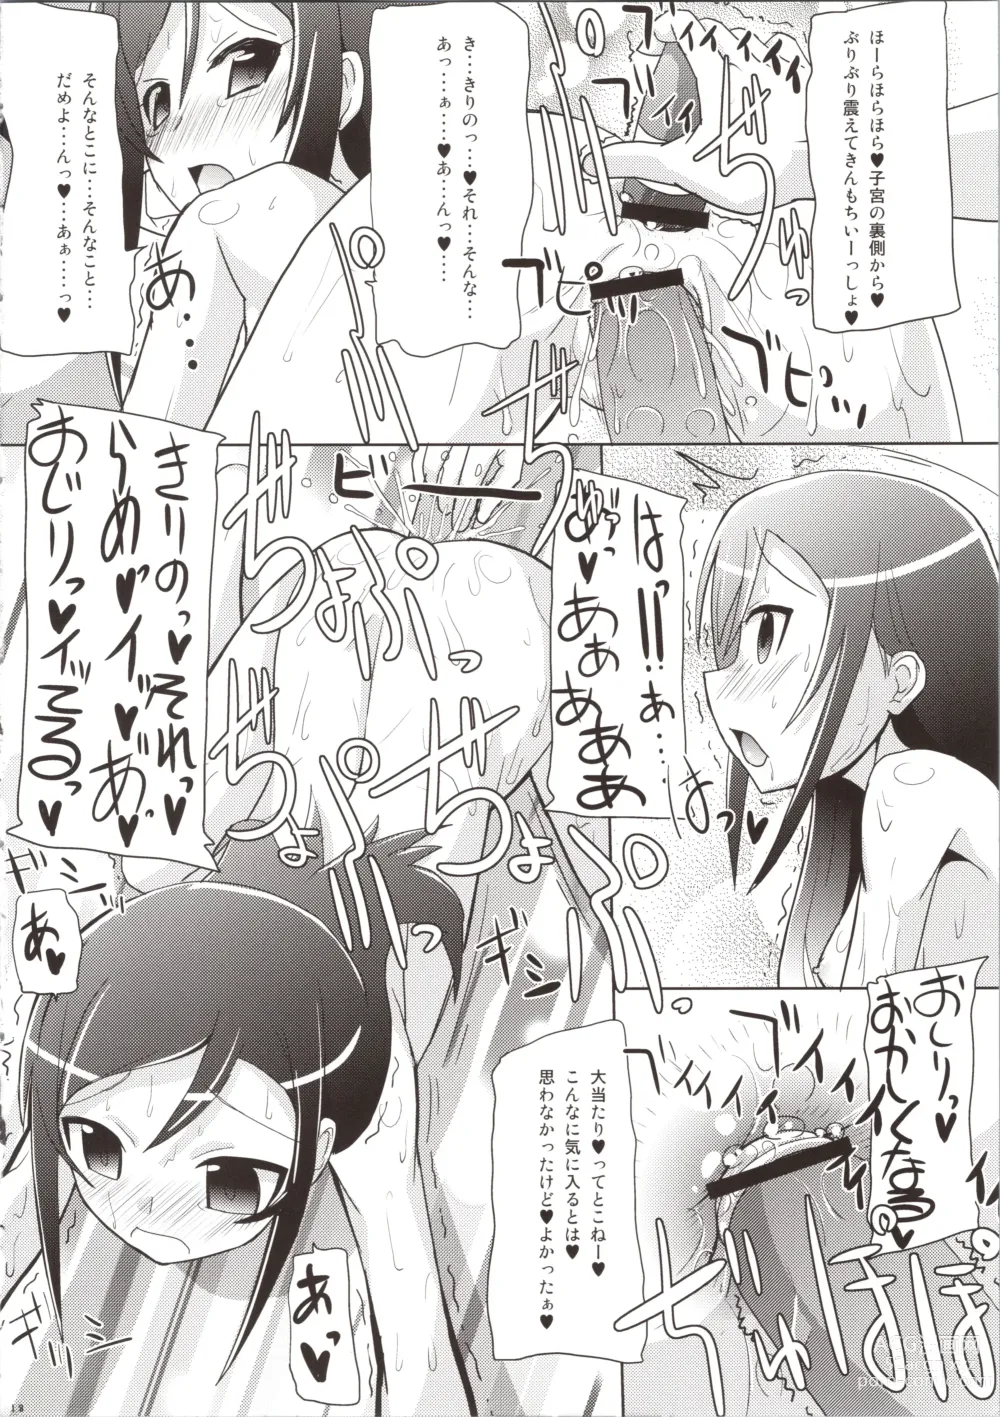 Page 18 of doujinshi Imotama!!